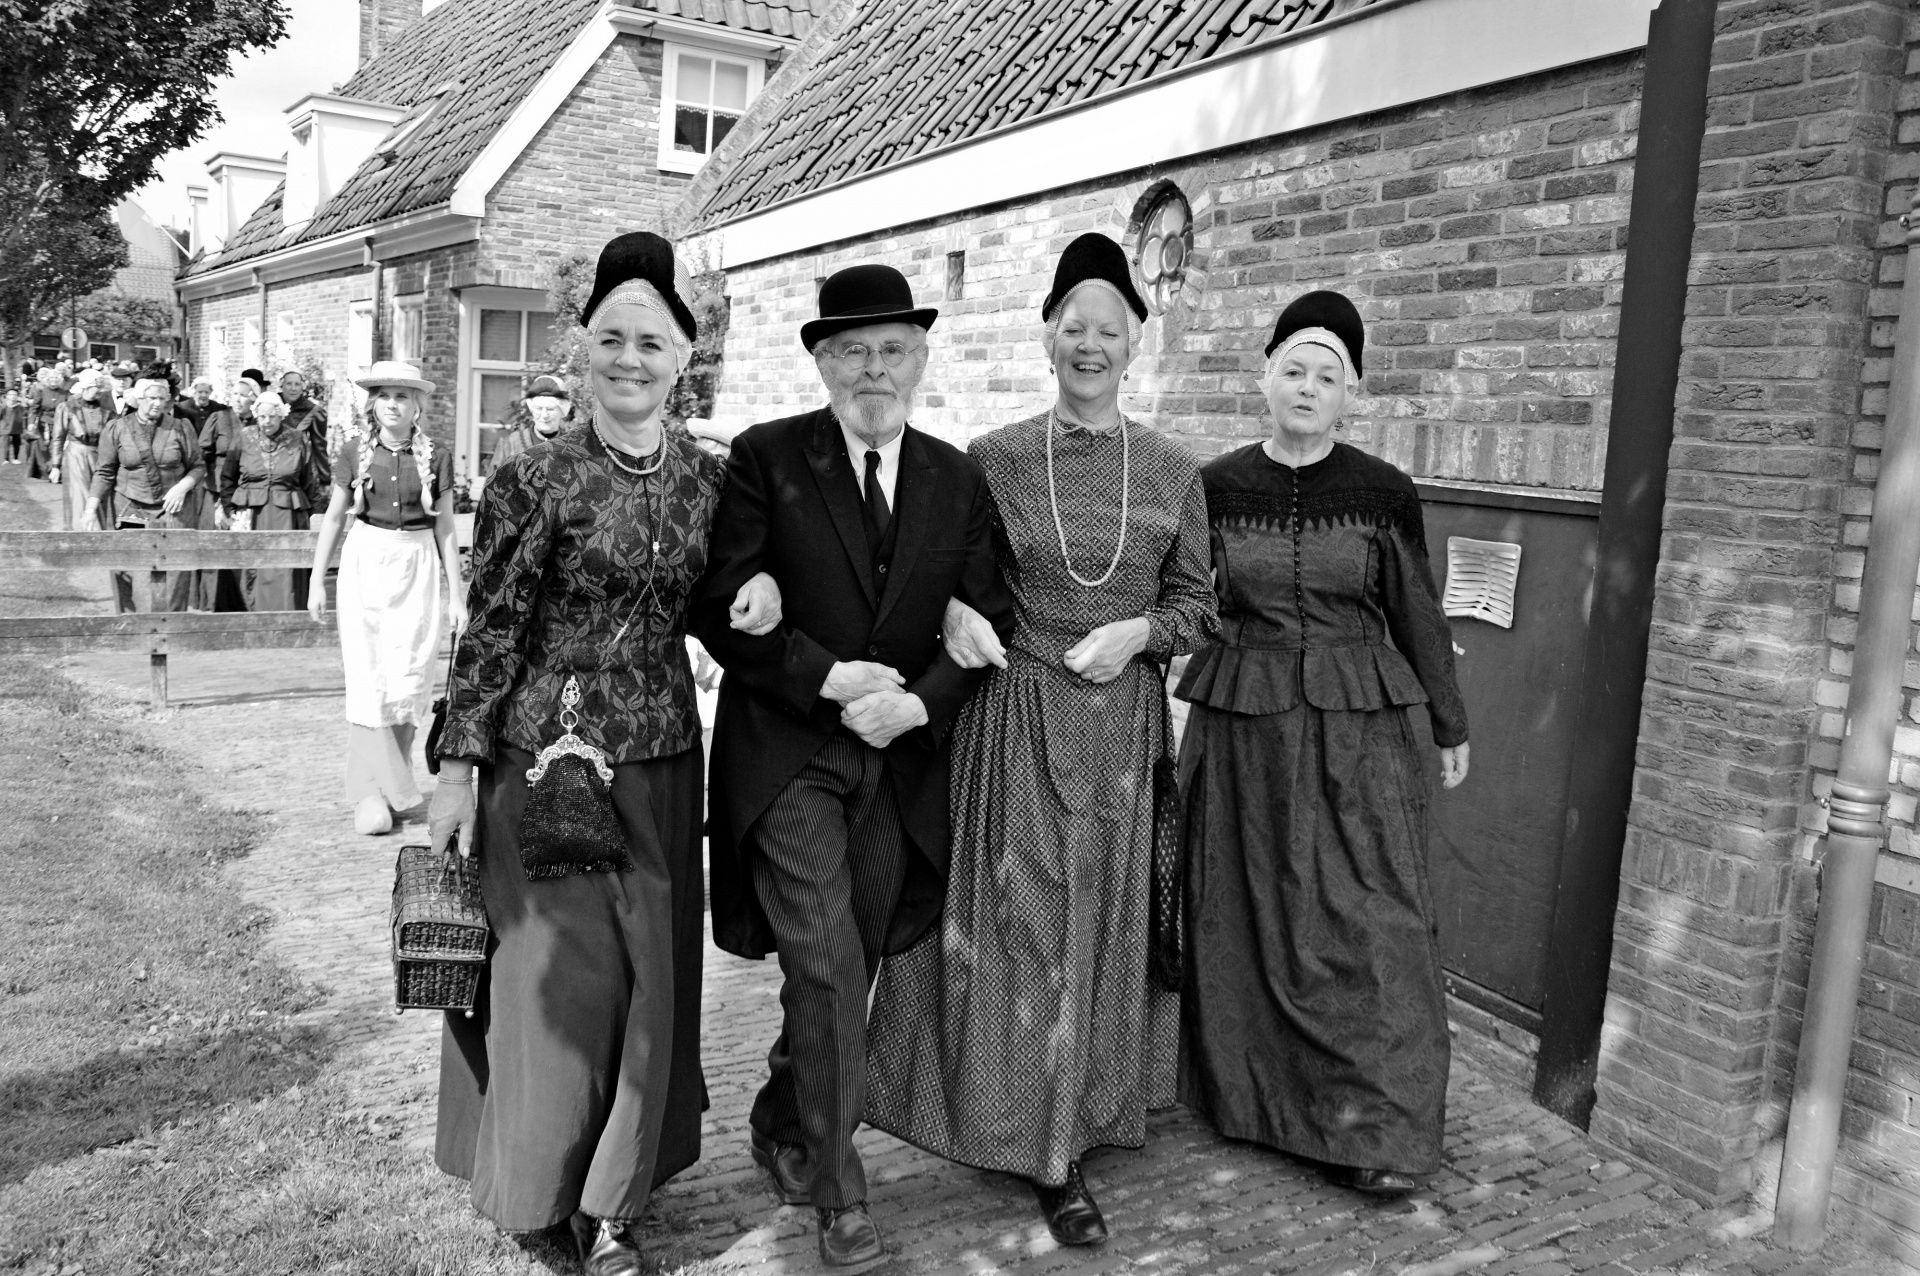 folklore north holland free photo